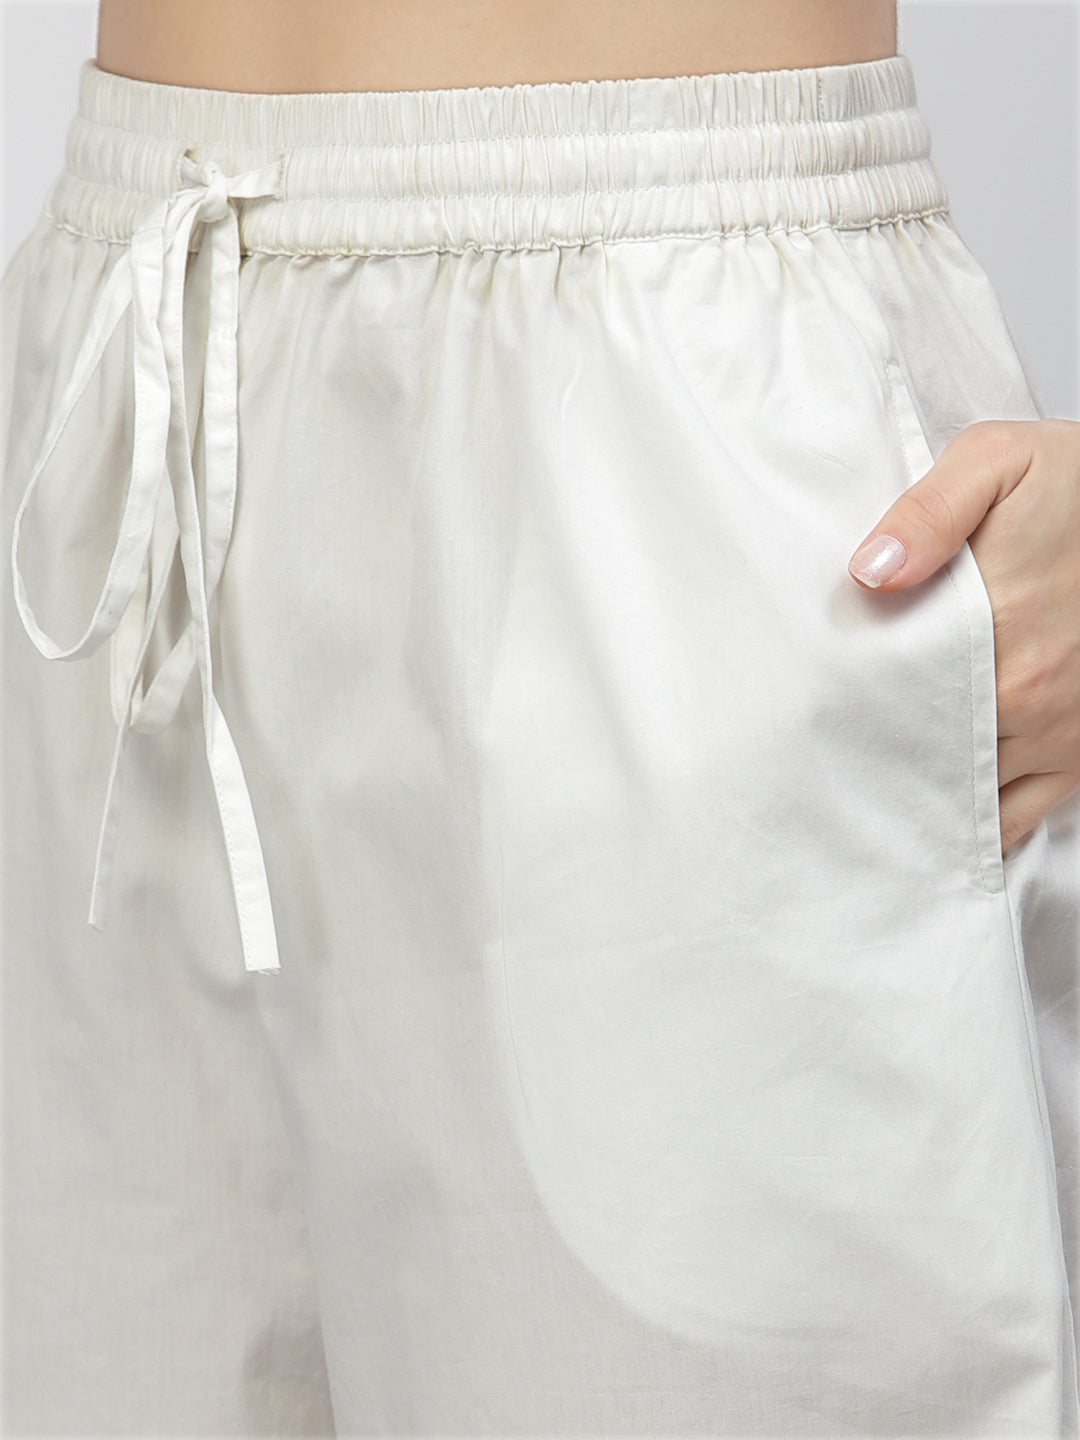 Blanc9 White Top With Flared Cotton Pyjama Set-B9NW71